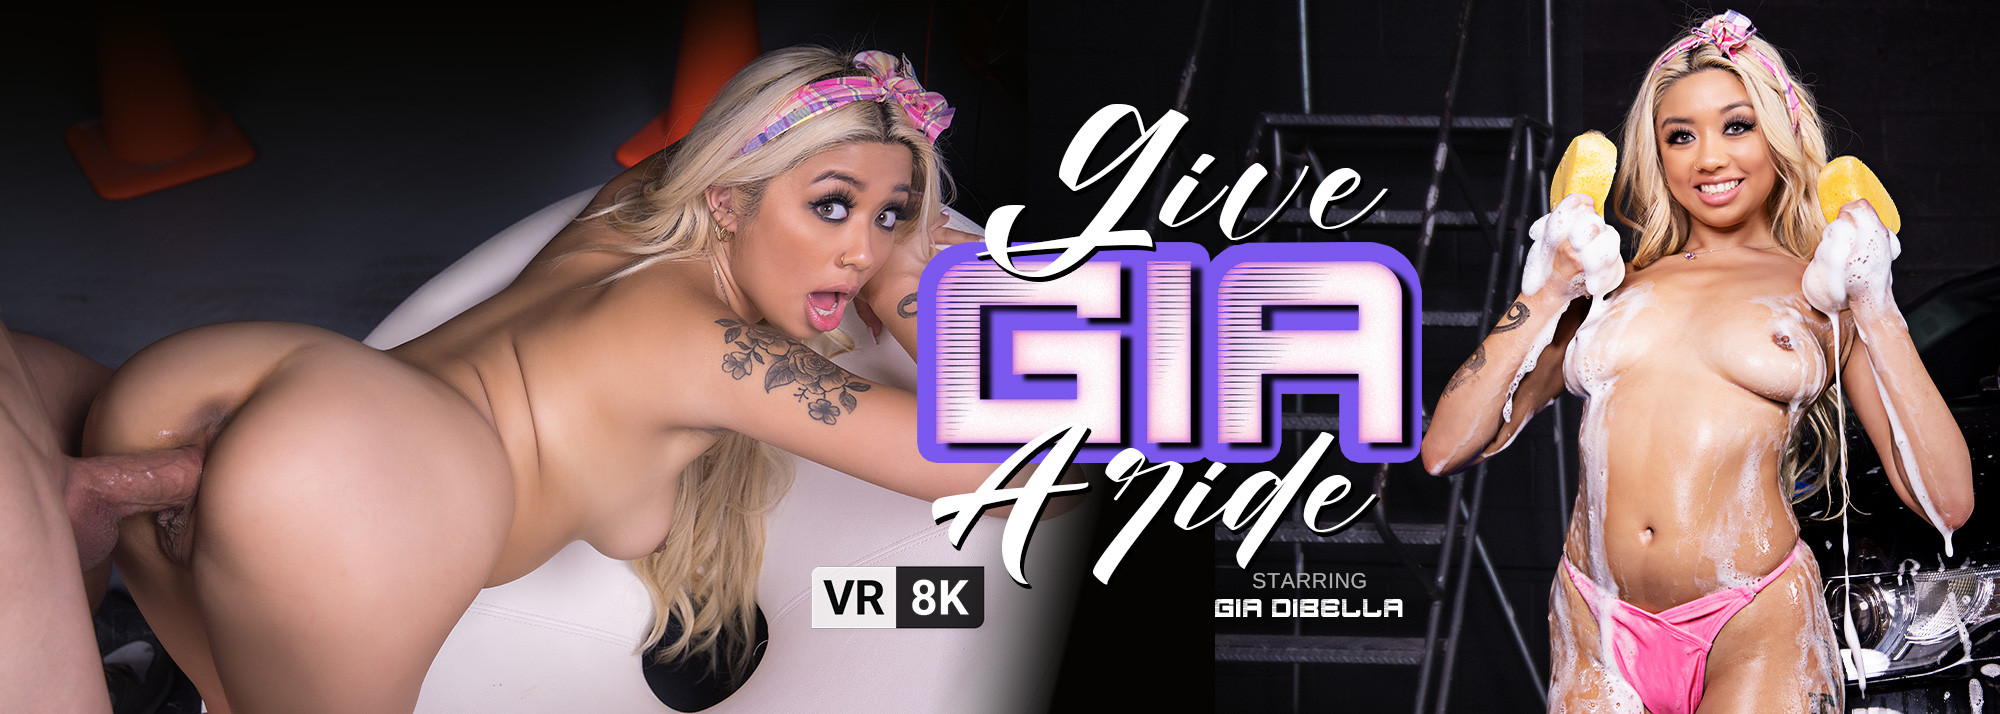 Give Gia A Ride - VR Porn Video, Starring: Gia DiBella